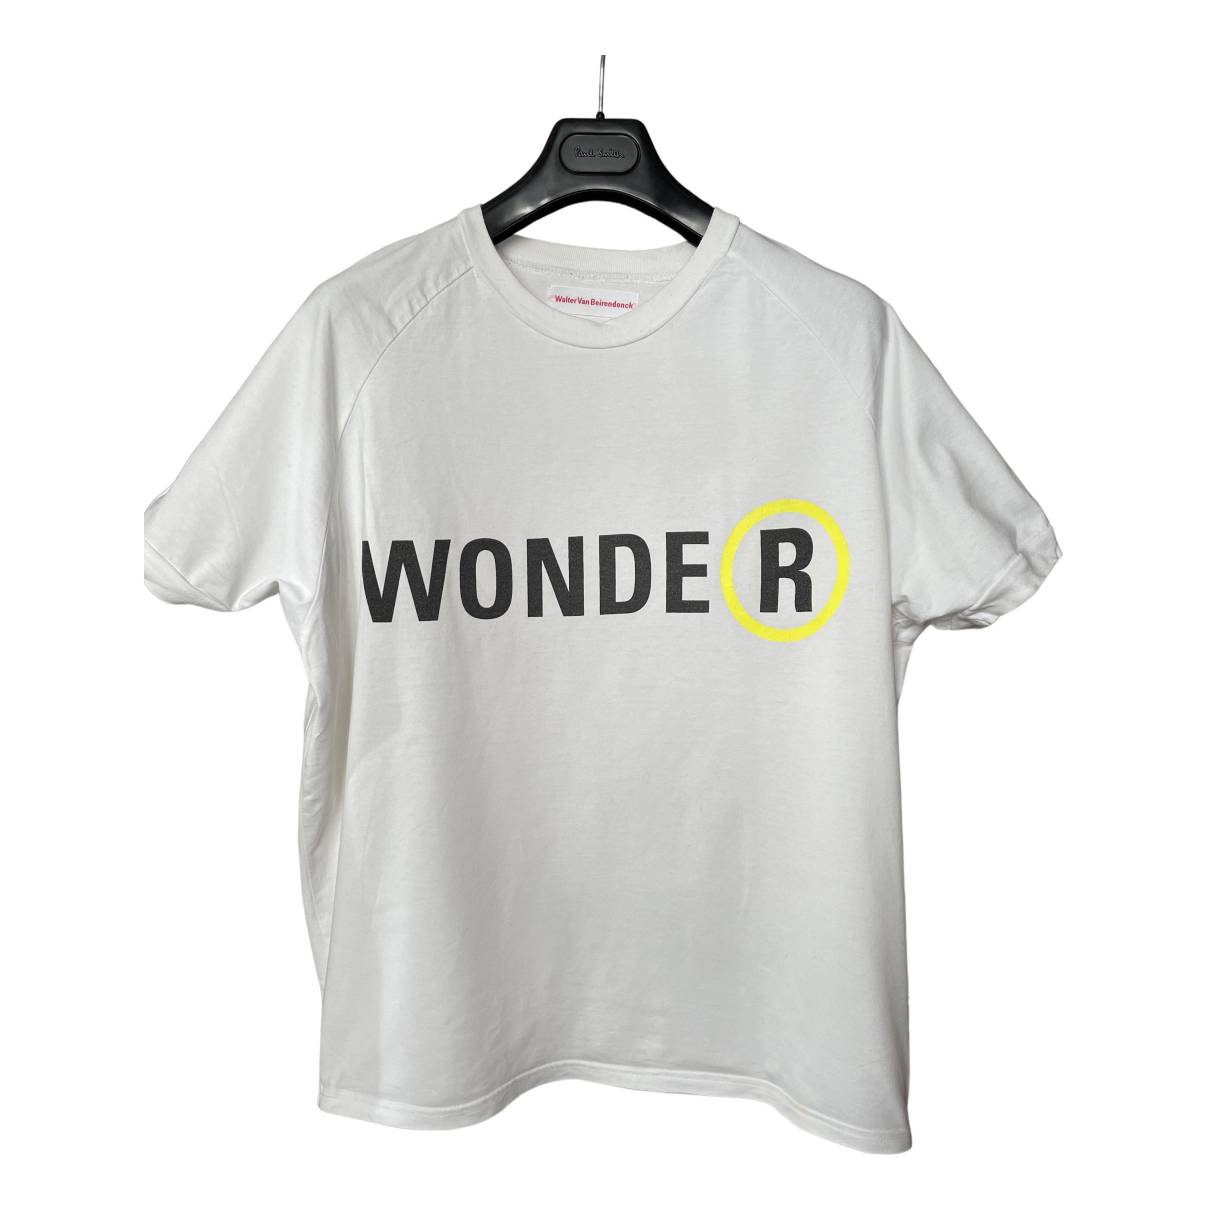 T-shirt Walter Van Beirendonck White size M International in